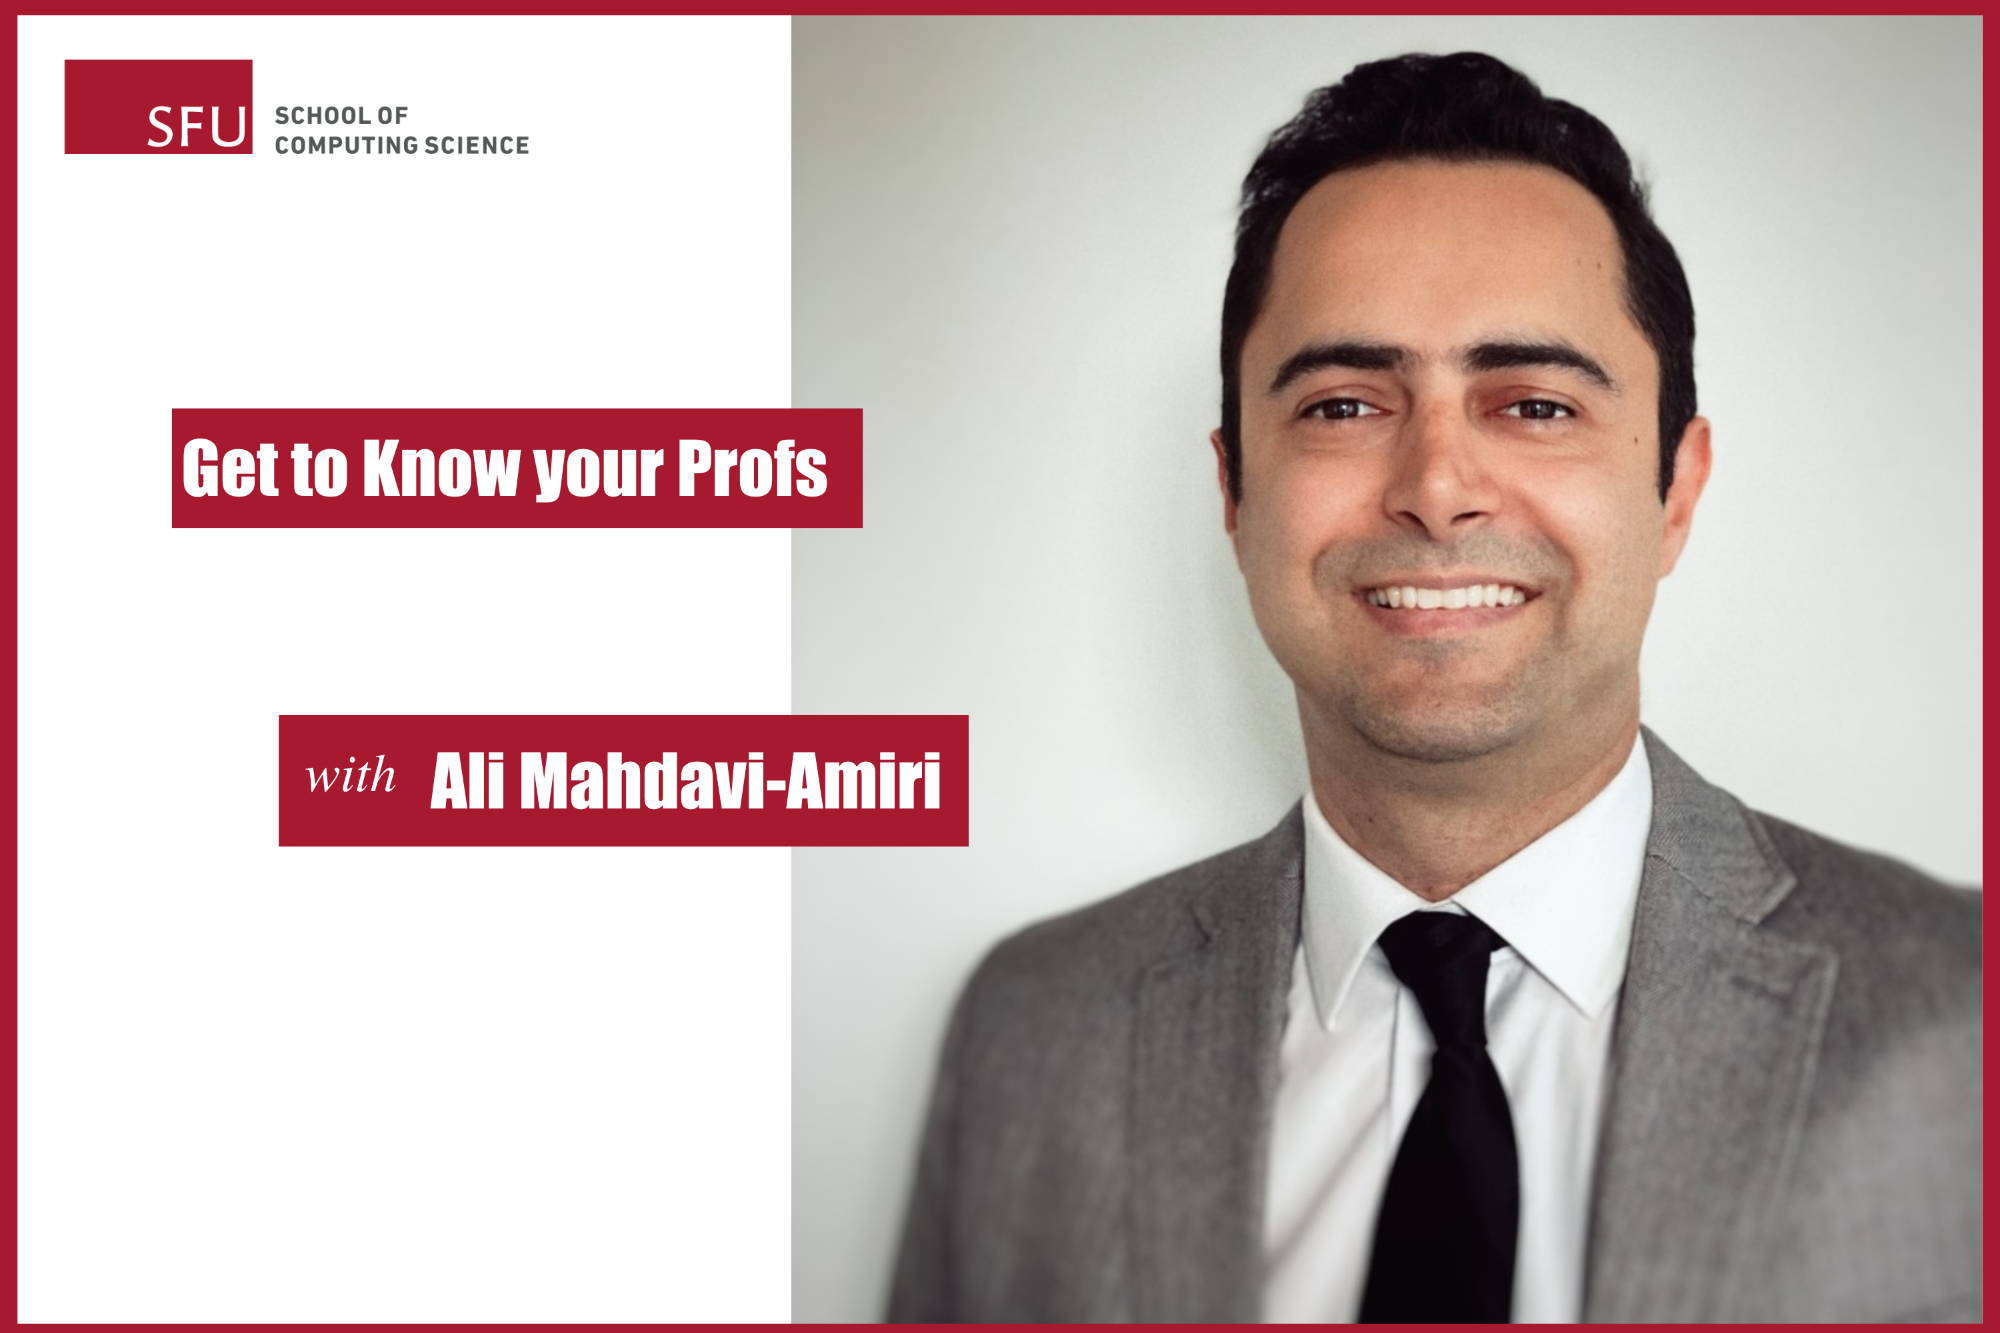 Get to know your Profs with Ali Mahdavi-Amiri